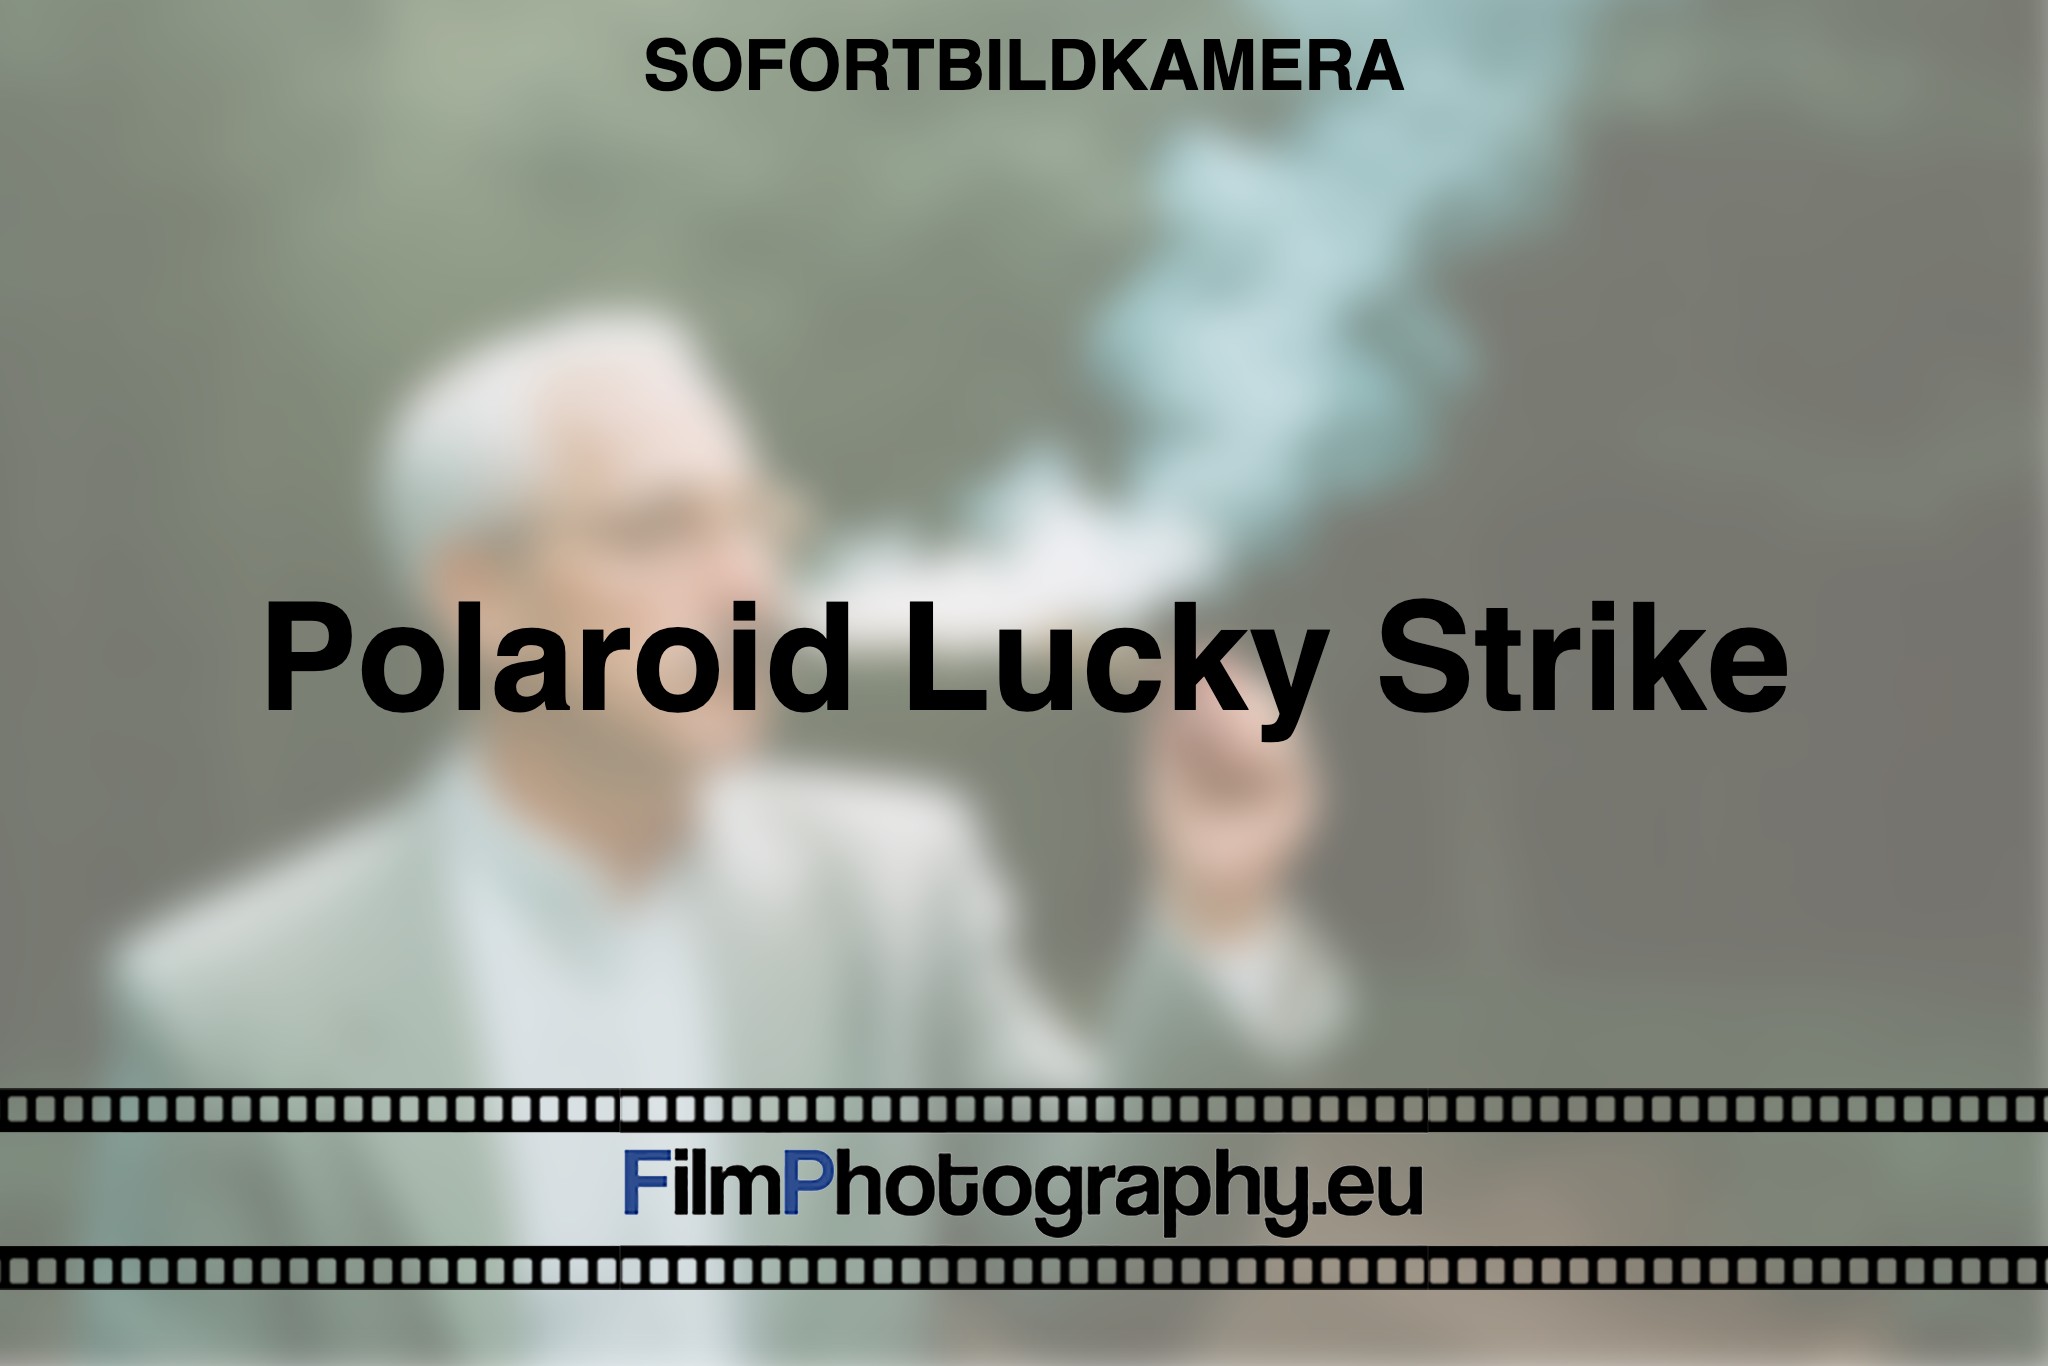 polaroid-lucky-strike-sofortbildkamera-fp-bnv